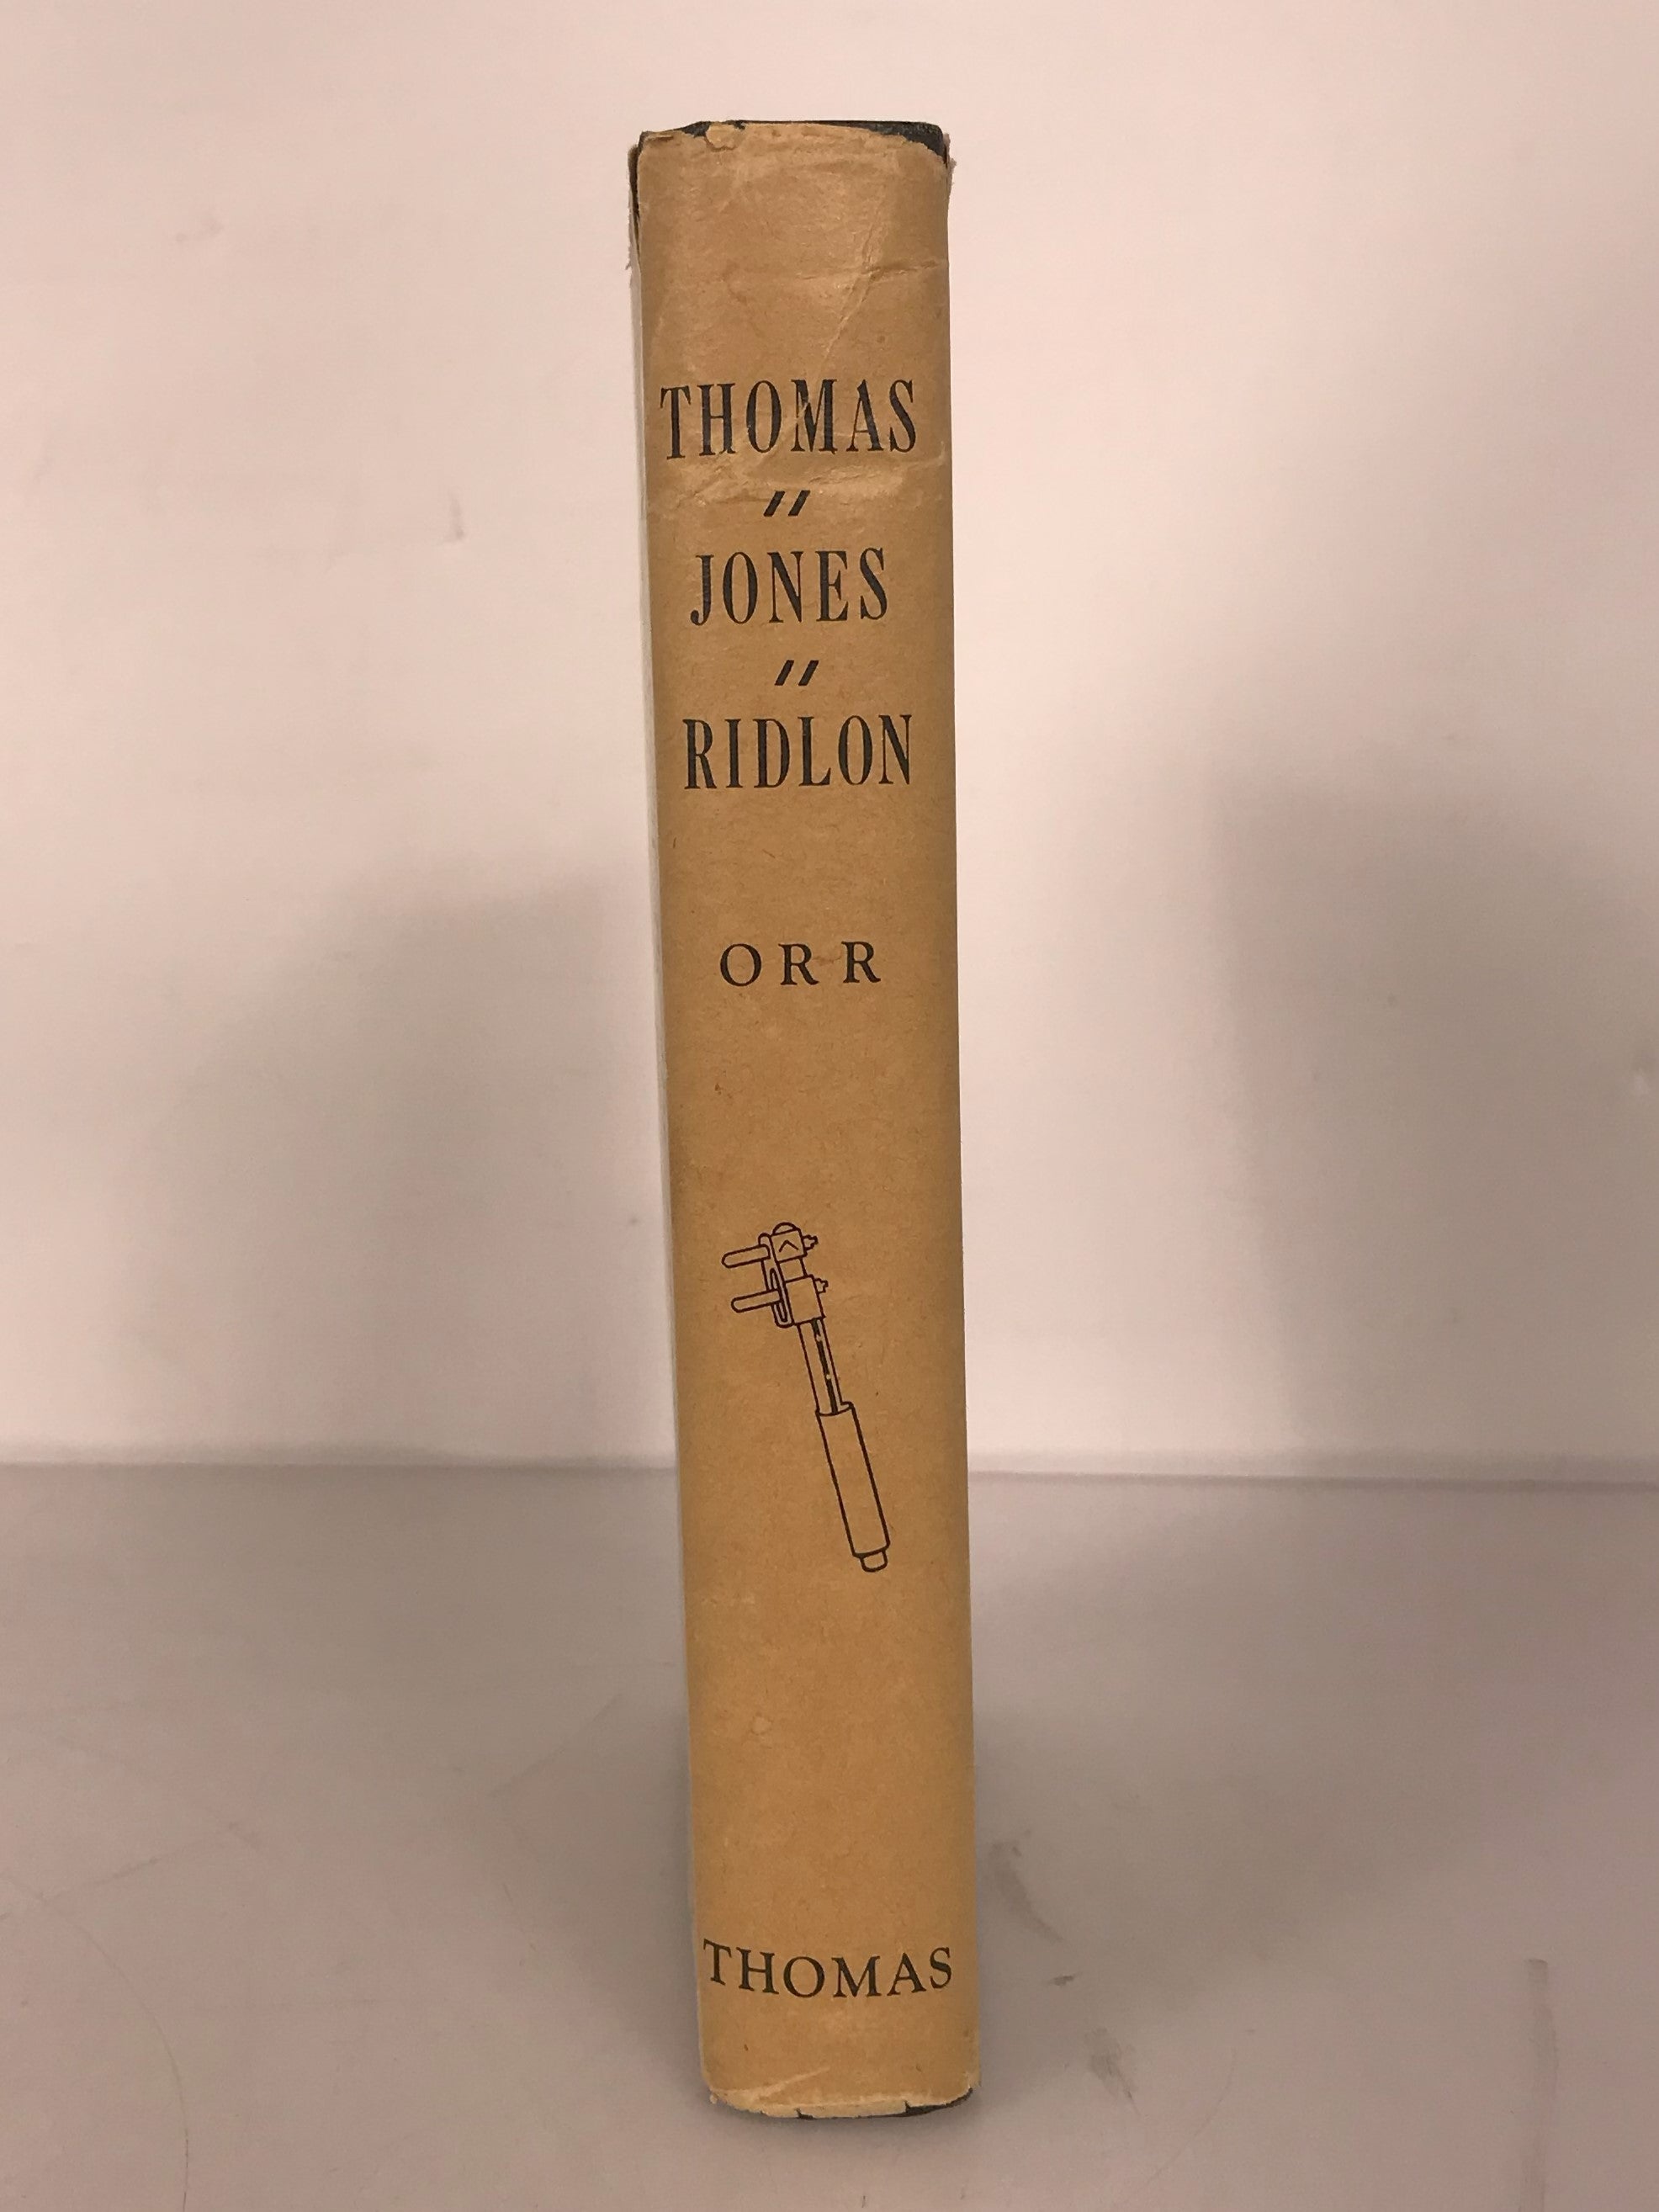 On the Contributions of Hugh Owen Thomas Sir Robert Jones and John Ridlon to Modern Orthopedic Surgery 1949 HC DJ